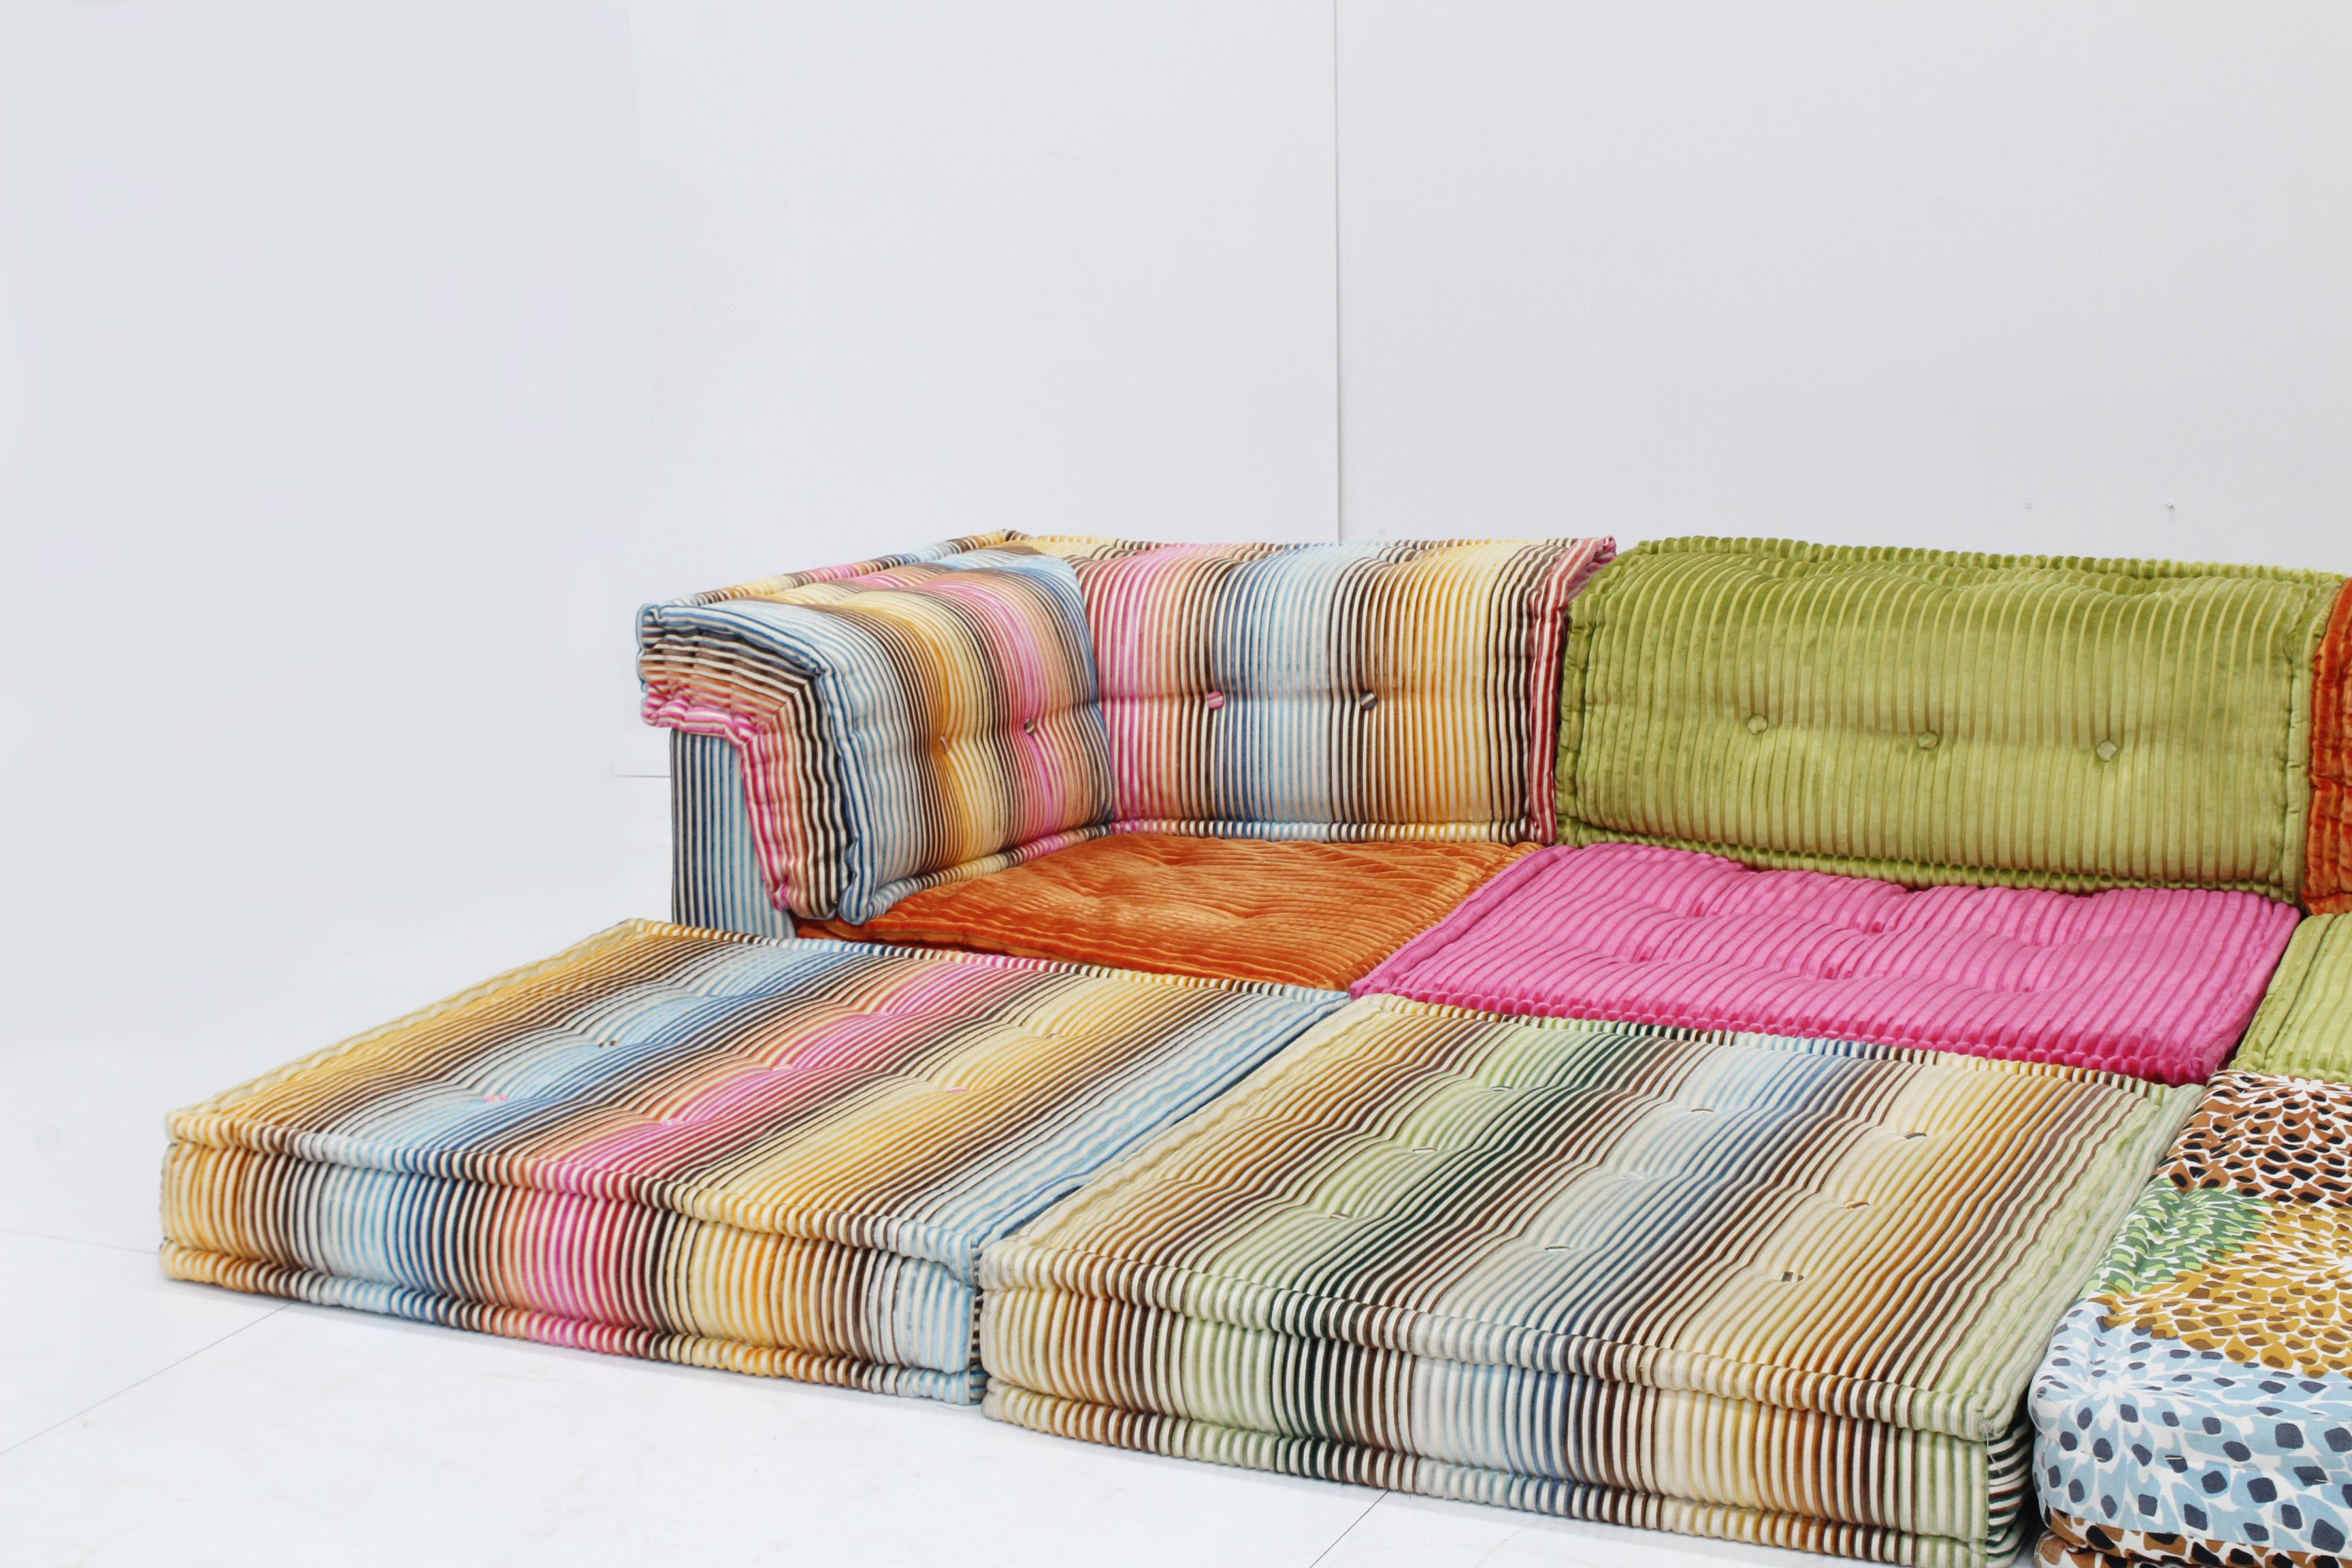 Roche Bobois Mah Jong sofa Missoni design by Hans Hopfer 2